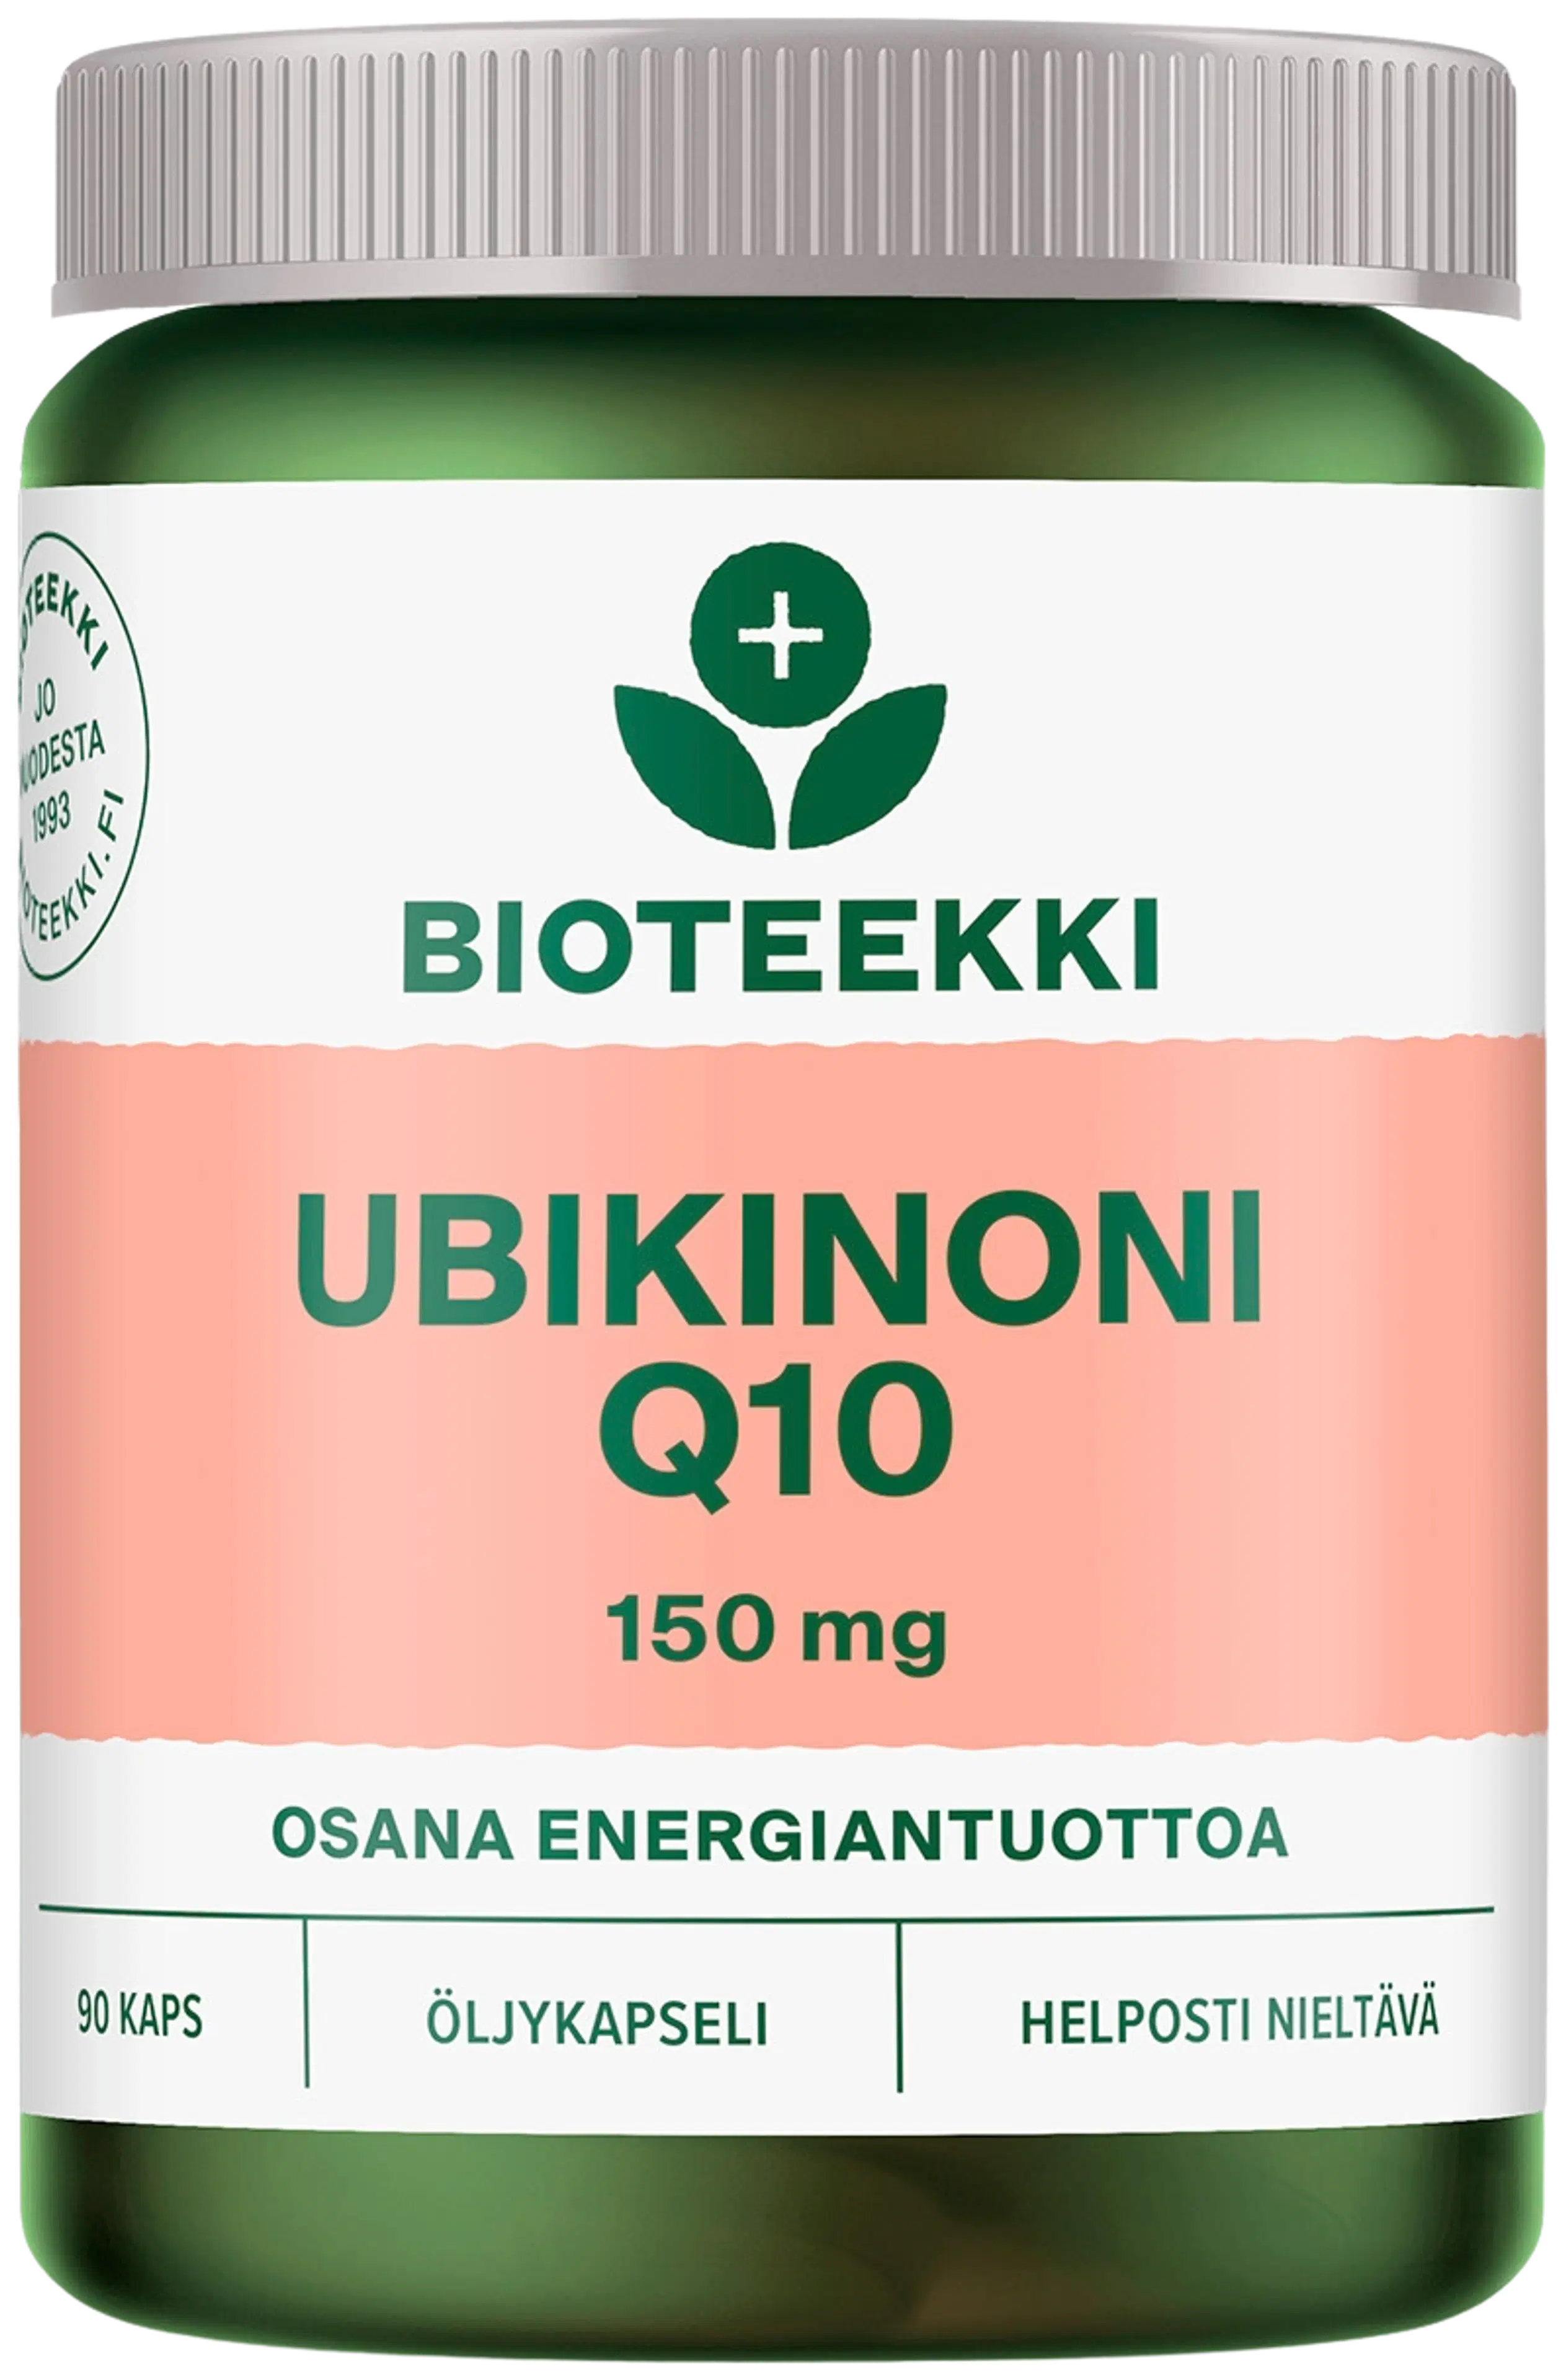 Bioteekki Ubikinoni Q10 150 mg ravintolisä 90 kaps.